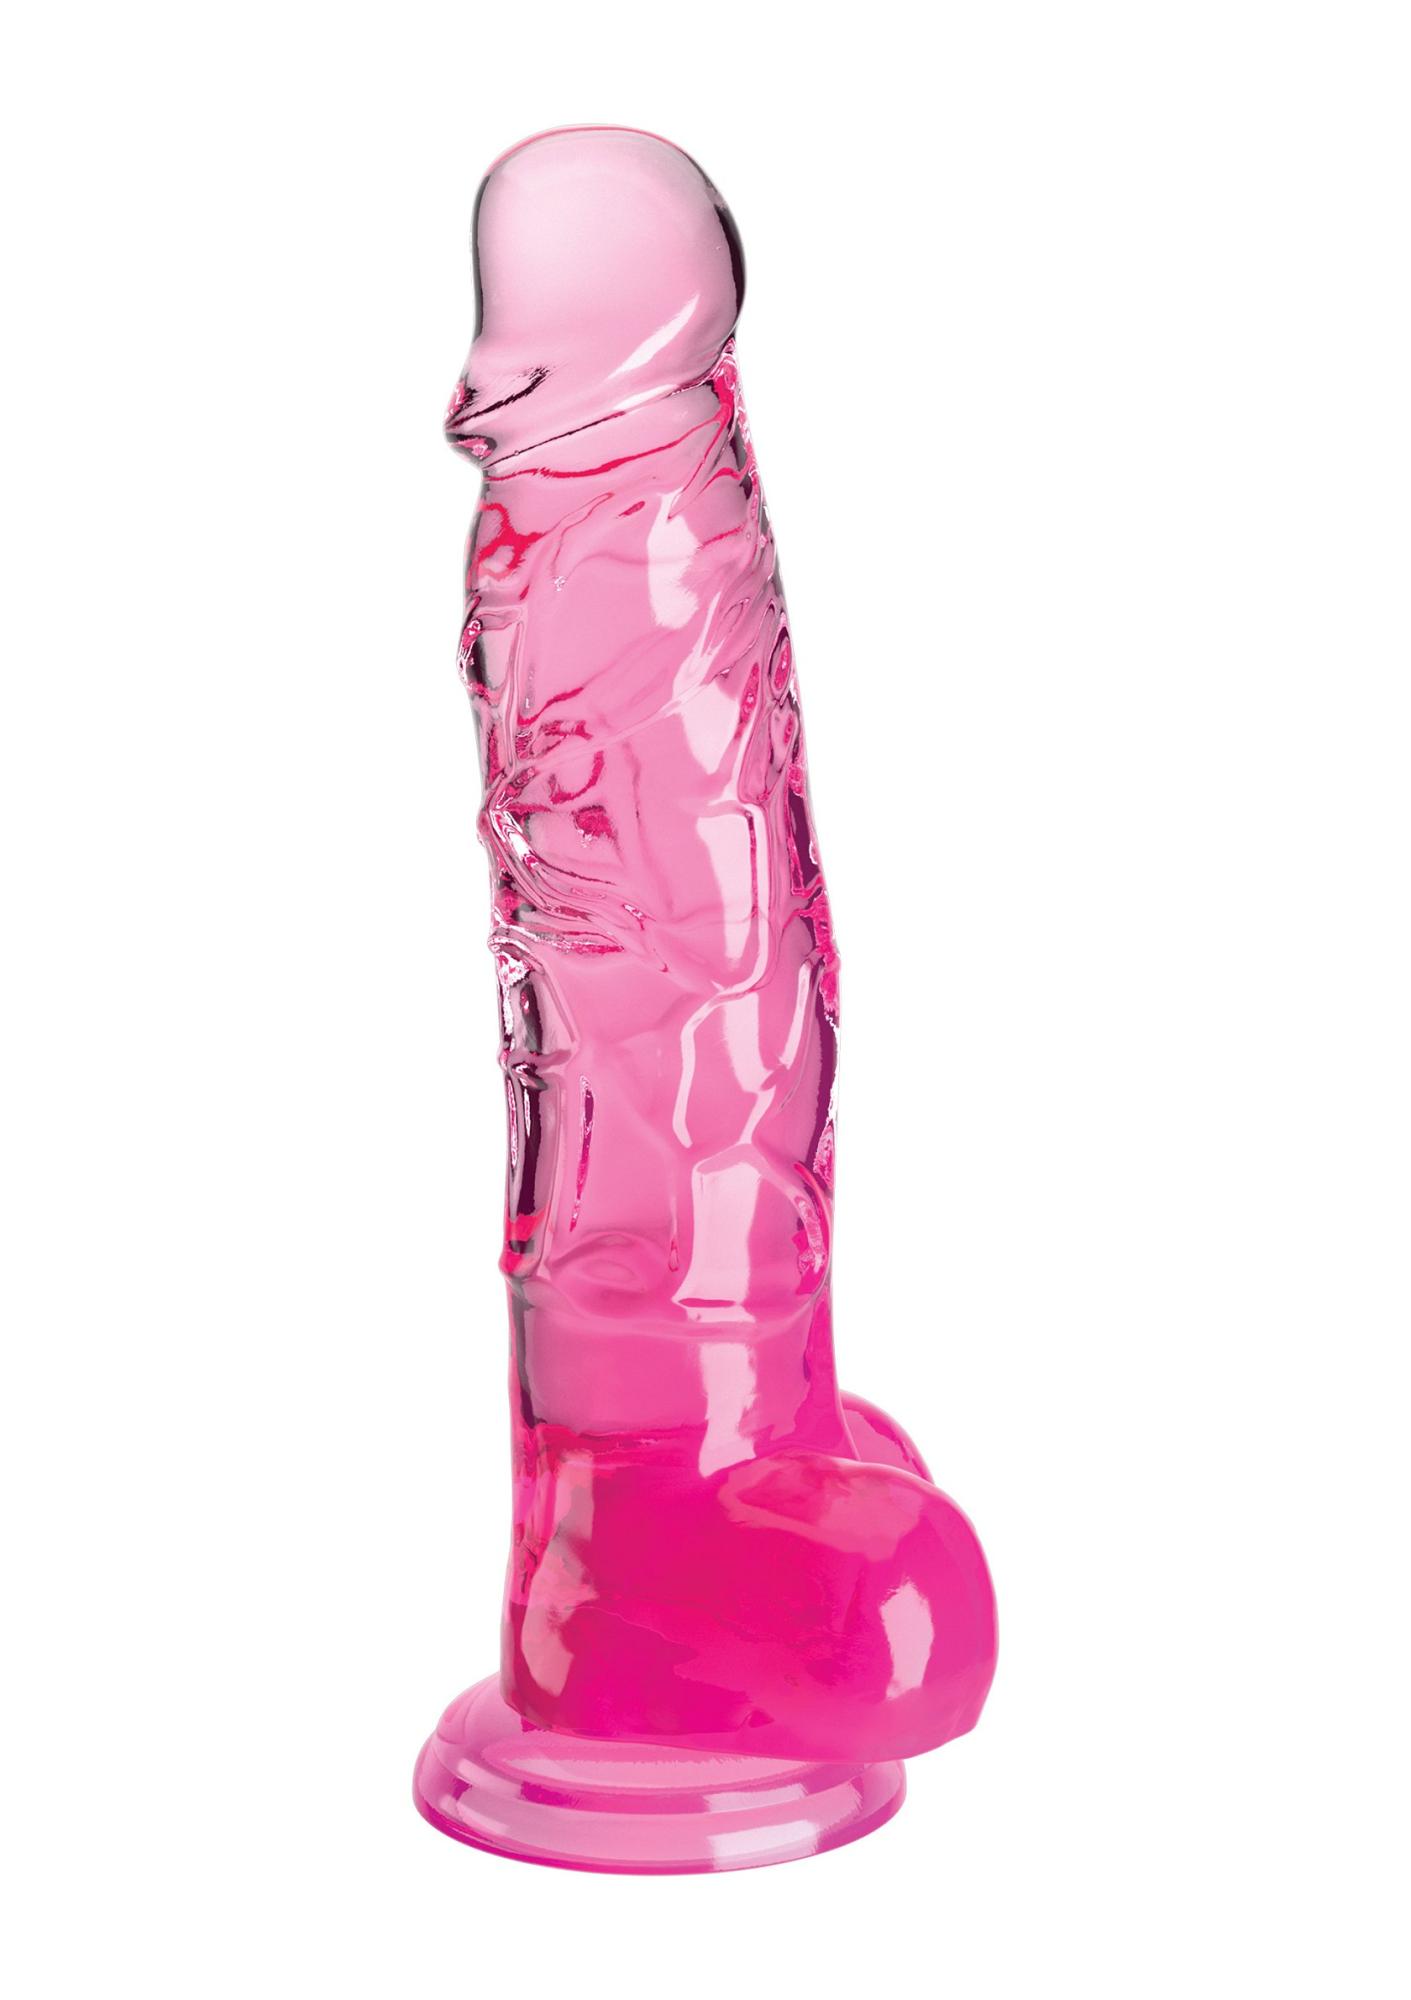 PipeDream King Cock Clear 8 - Прозрачный фаллоимитатор с мошонкой на присоске, 22.2х5.1 см (розовый)